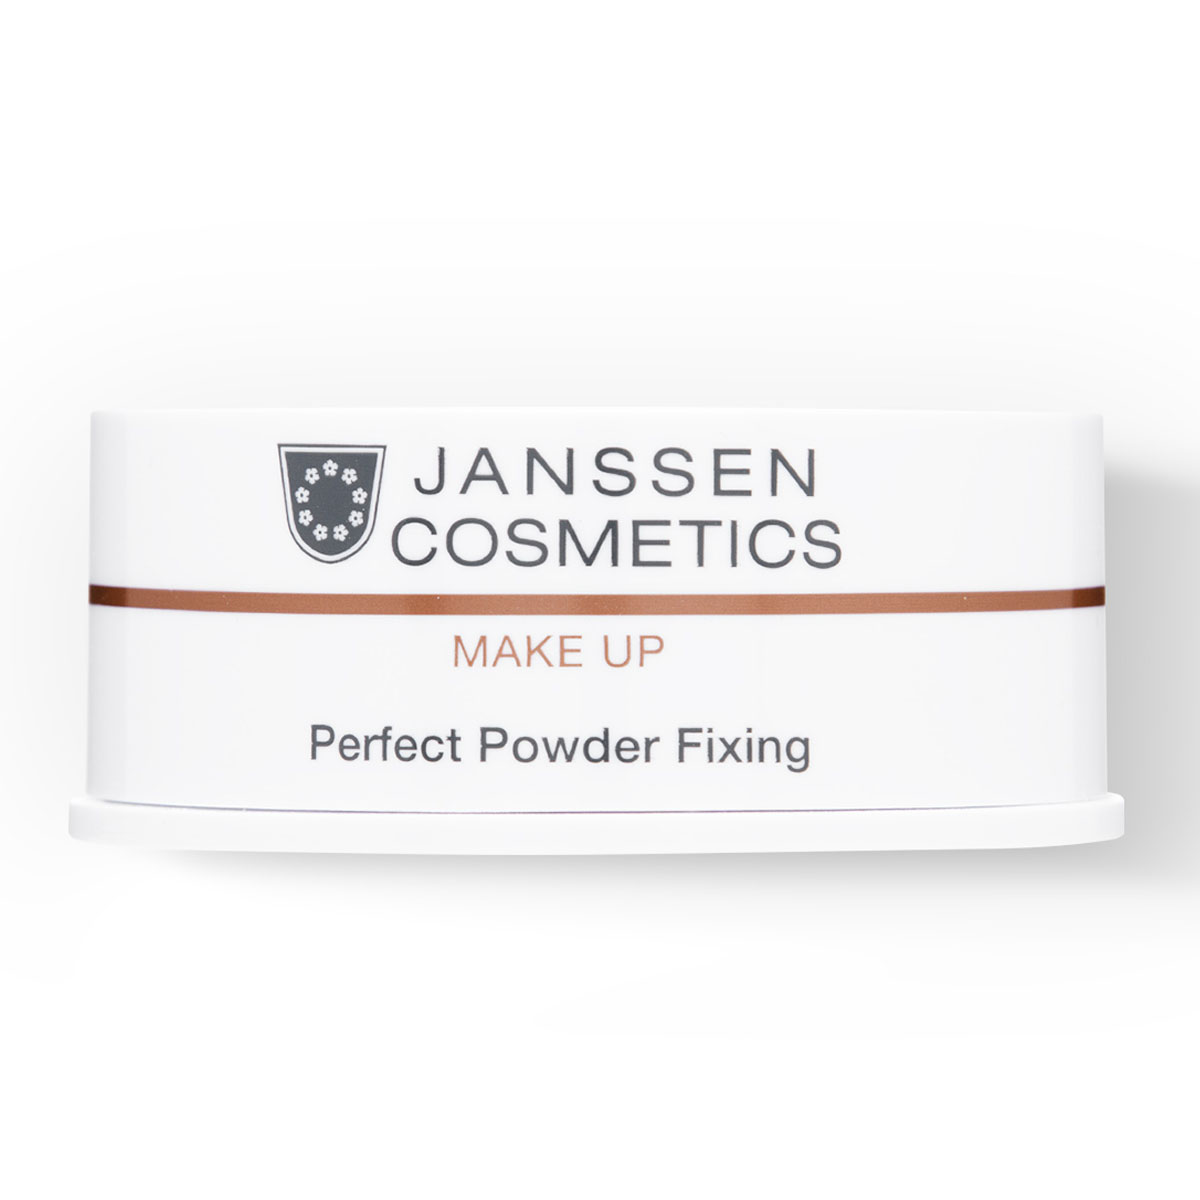 Janssen Cosmetics Специальная пудра для фиксации макияжа Perfect Powder Fixing, 30 г (Janssen Cosmetics, Make up)